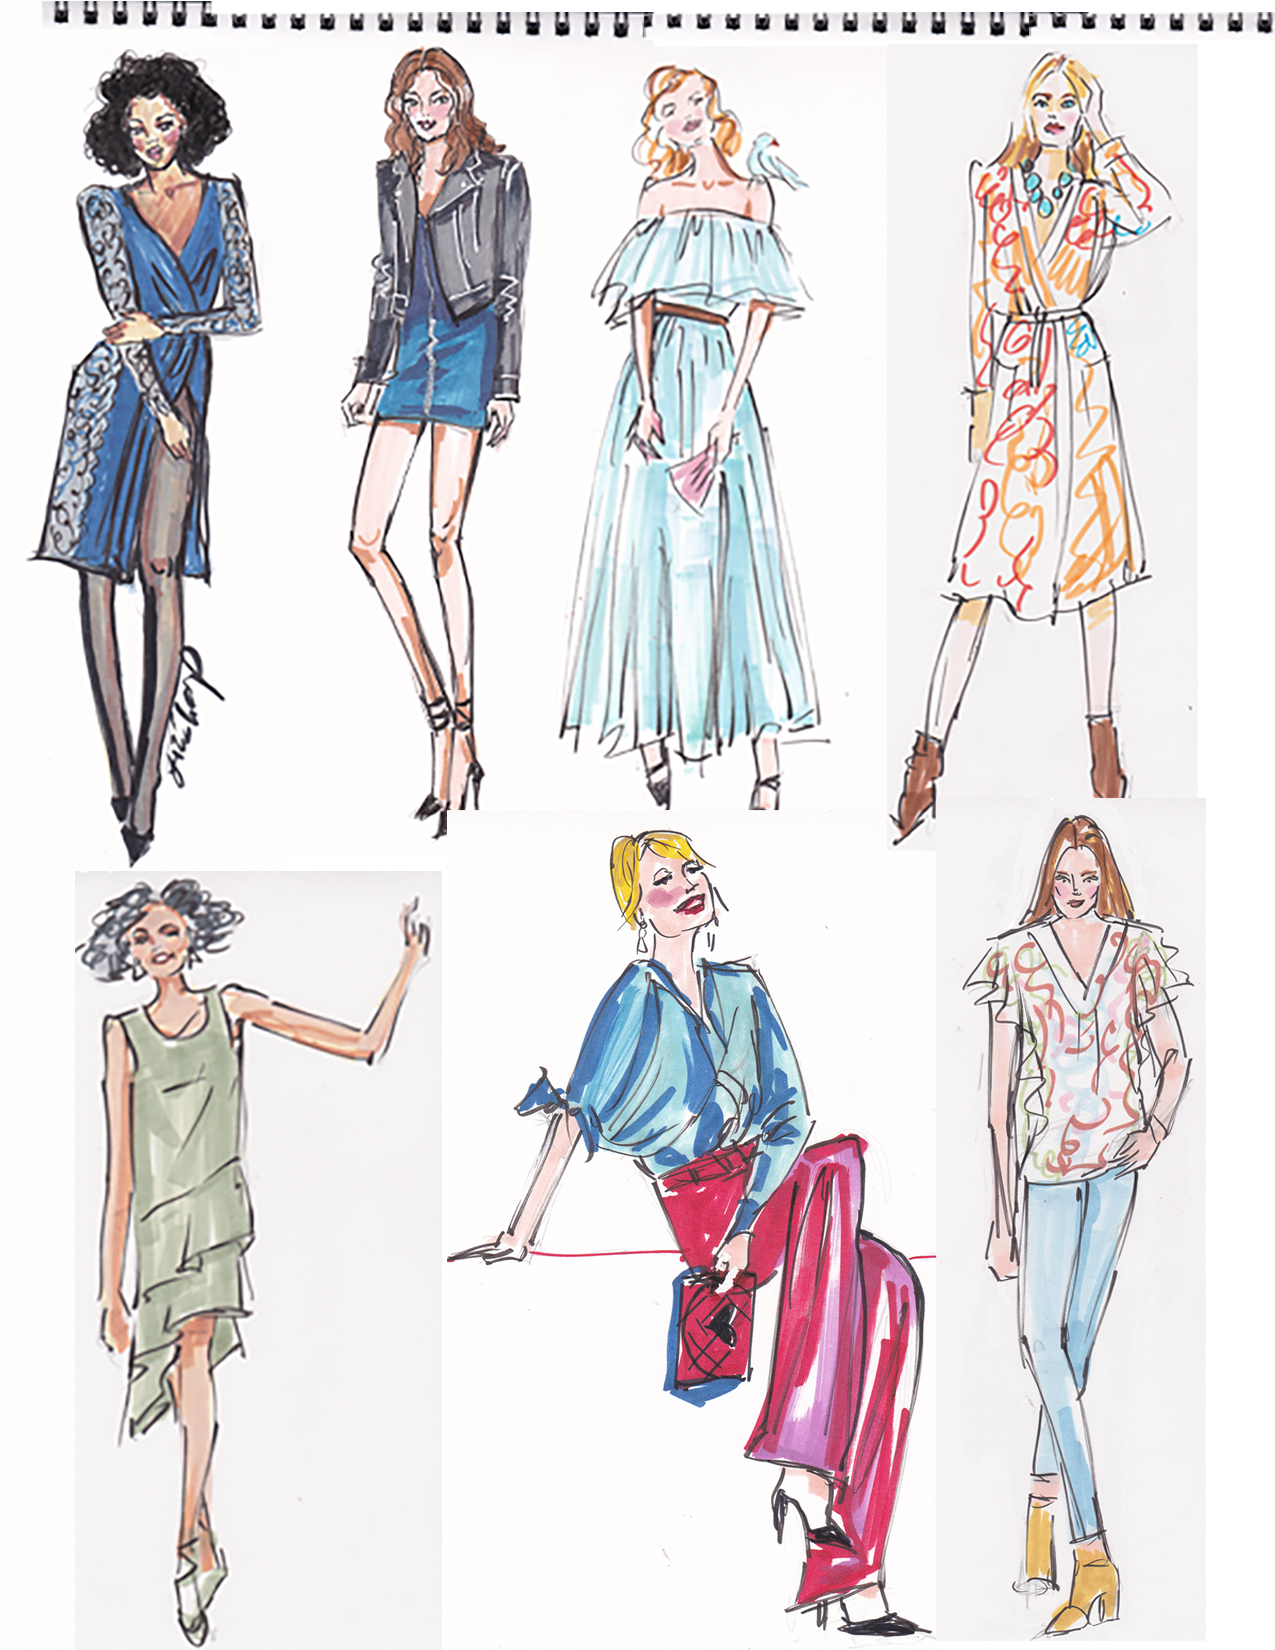 daily 5 min. fashion sketches